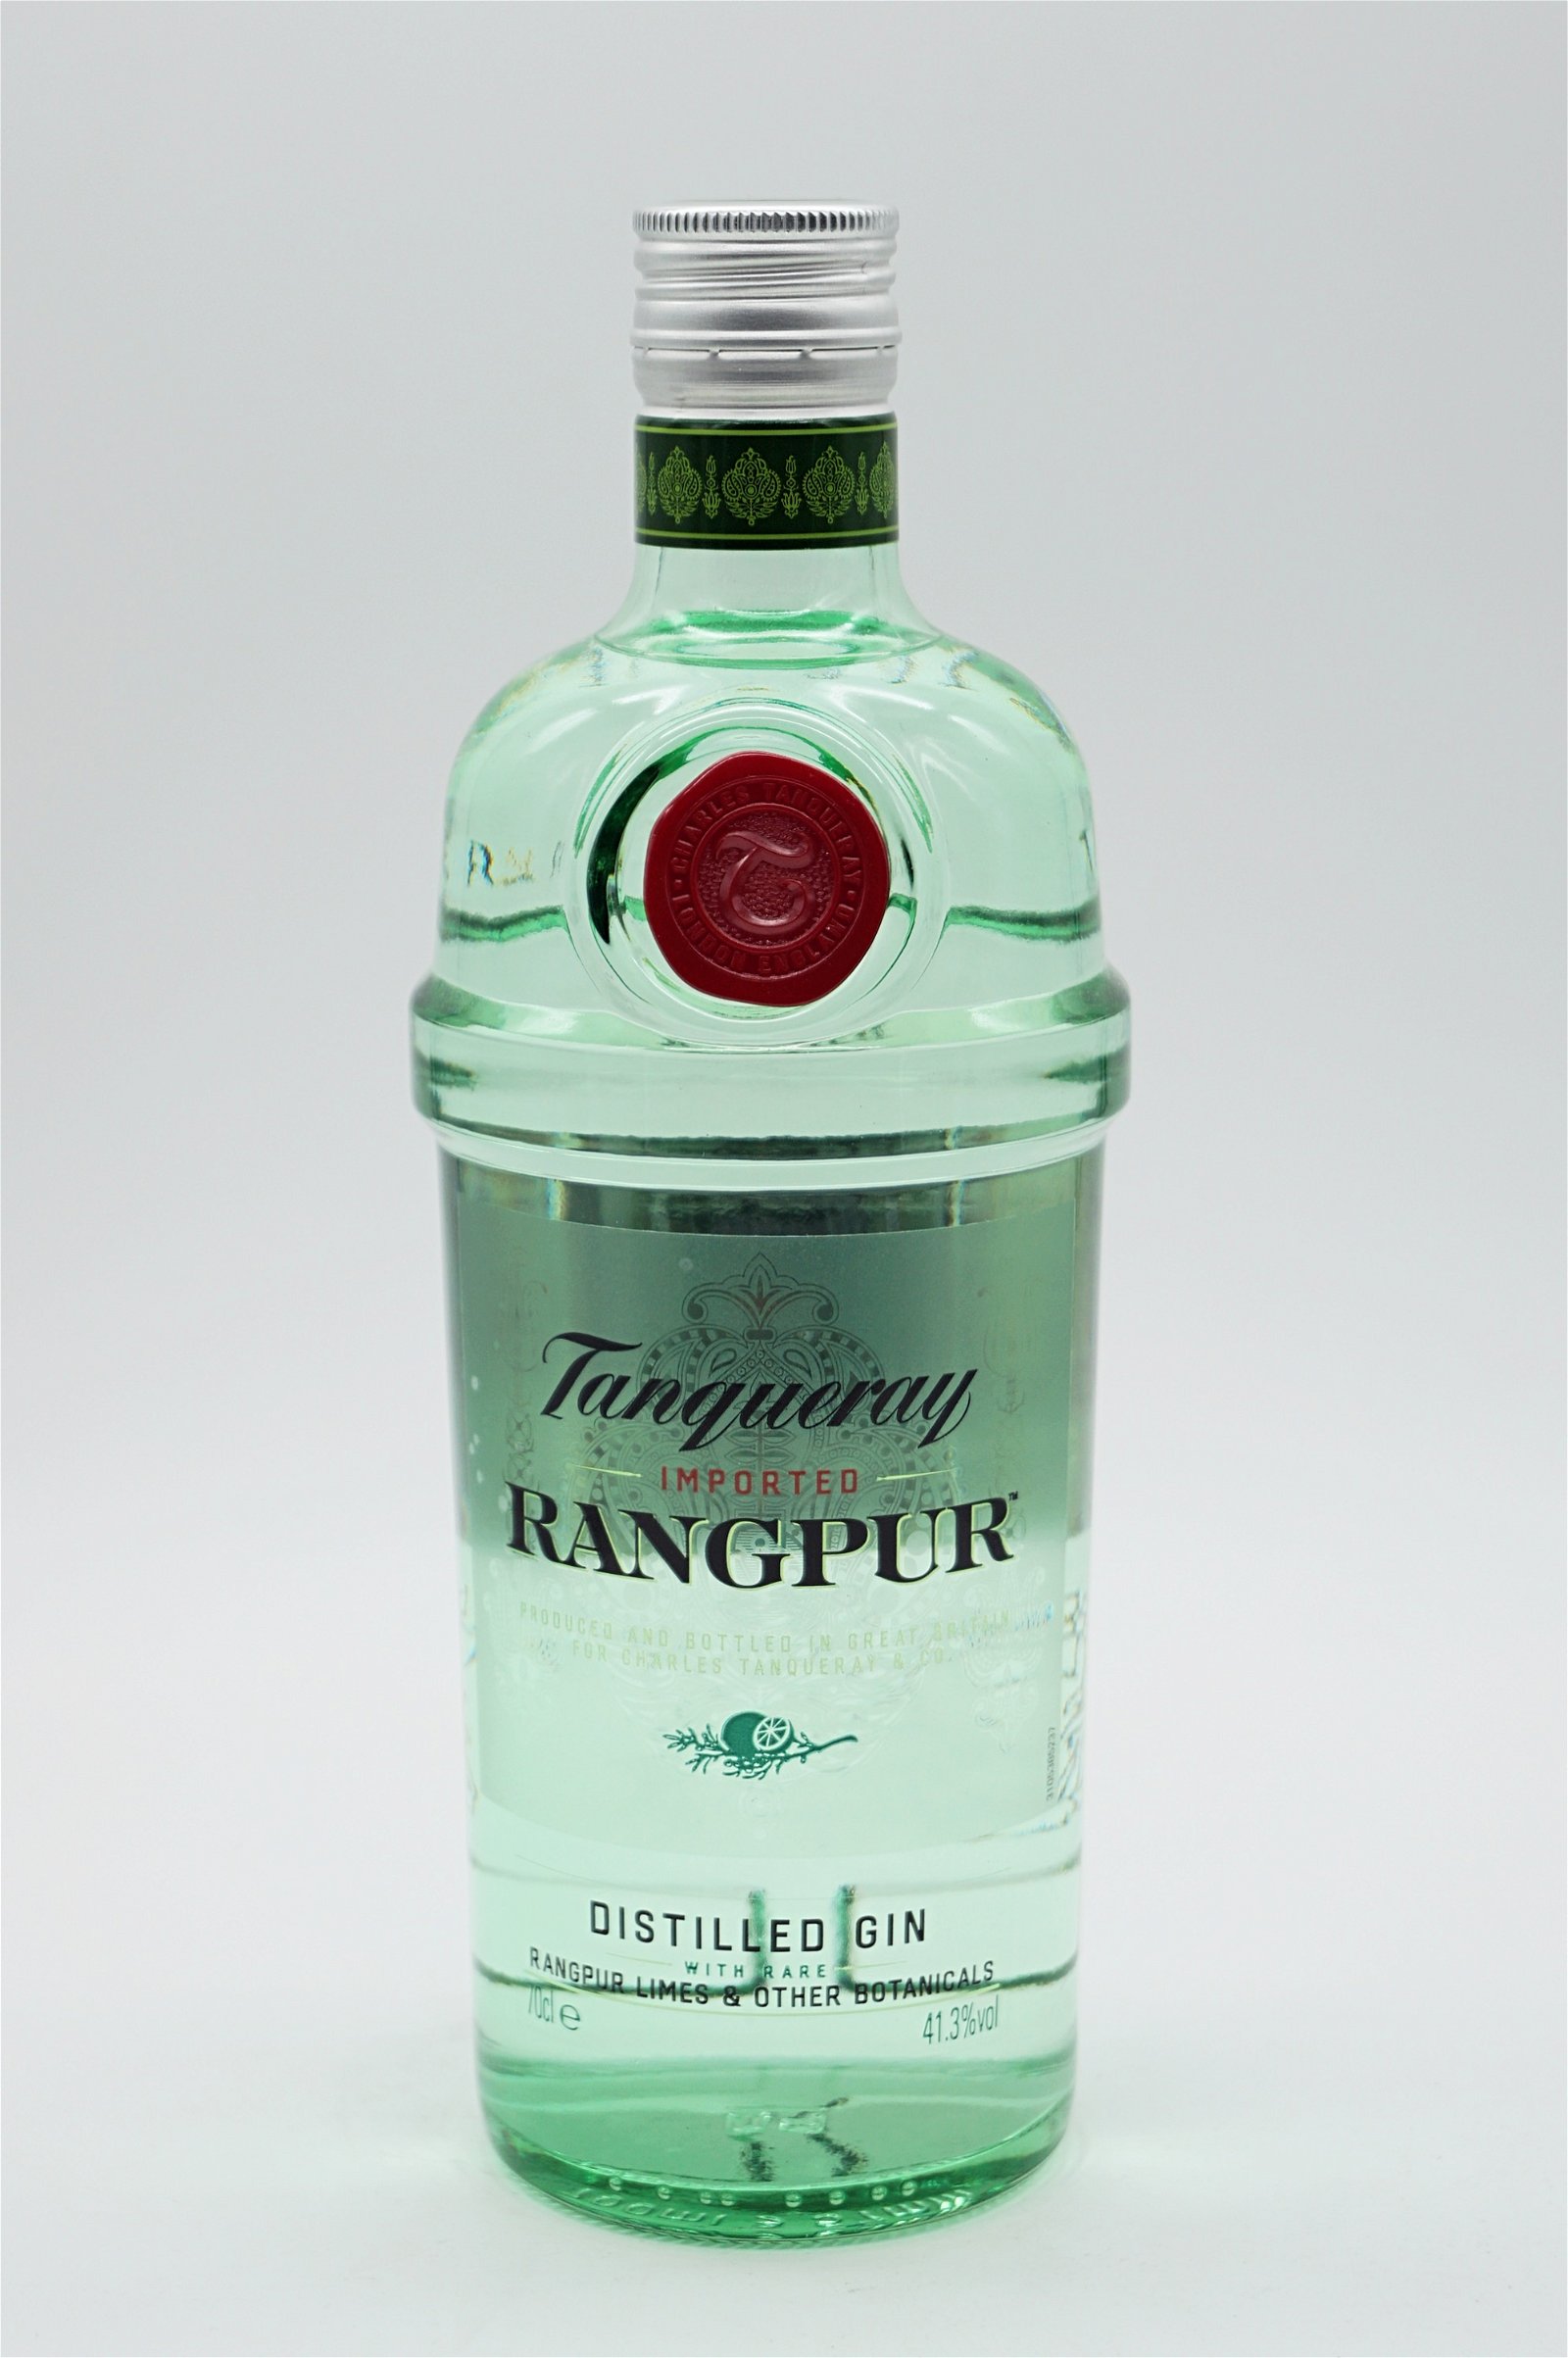 Tanqueray Rangpur London Dry Gin